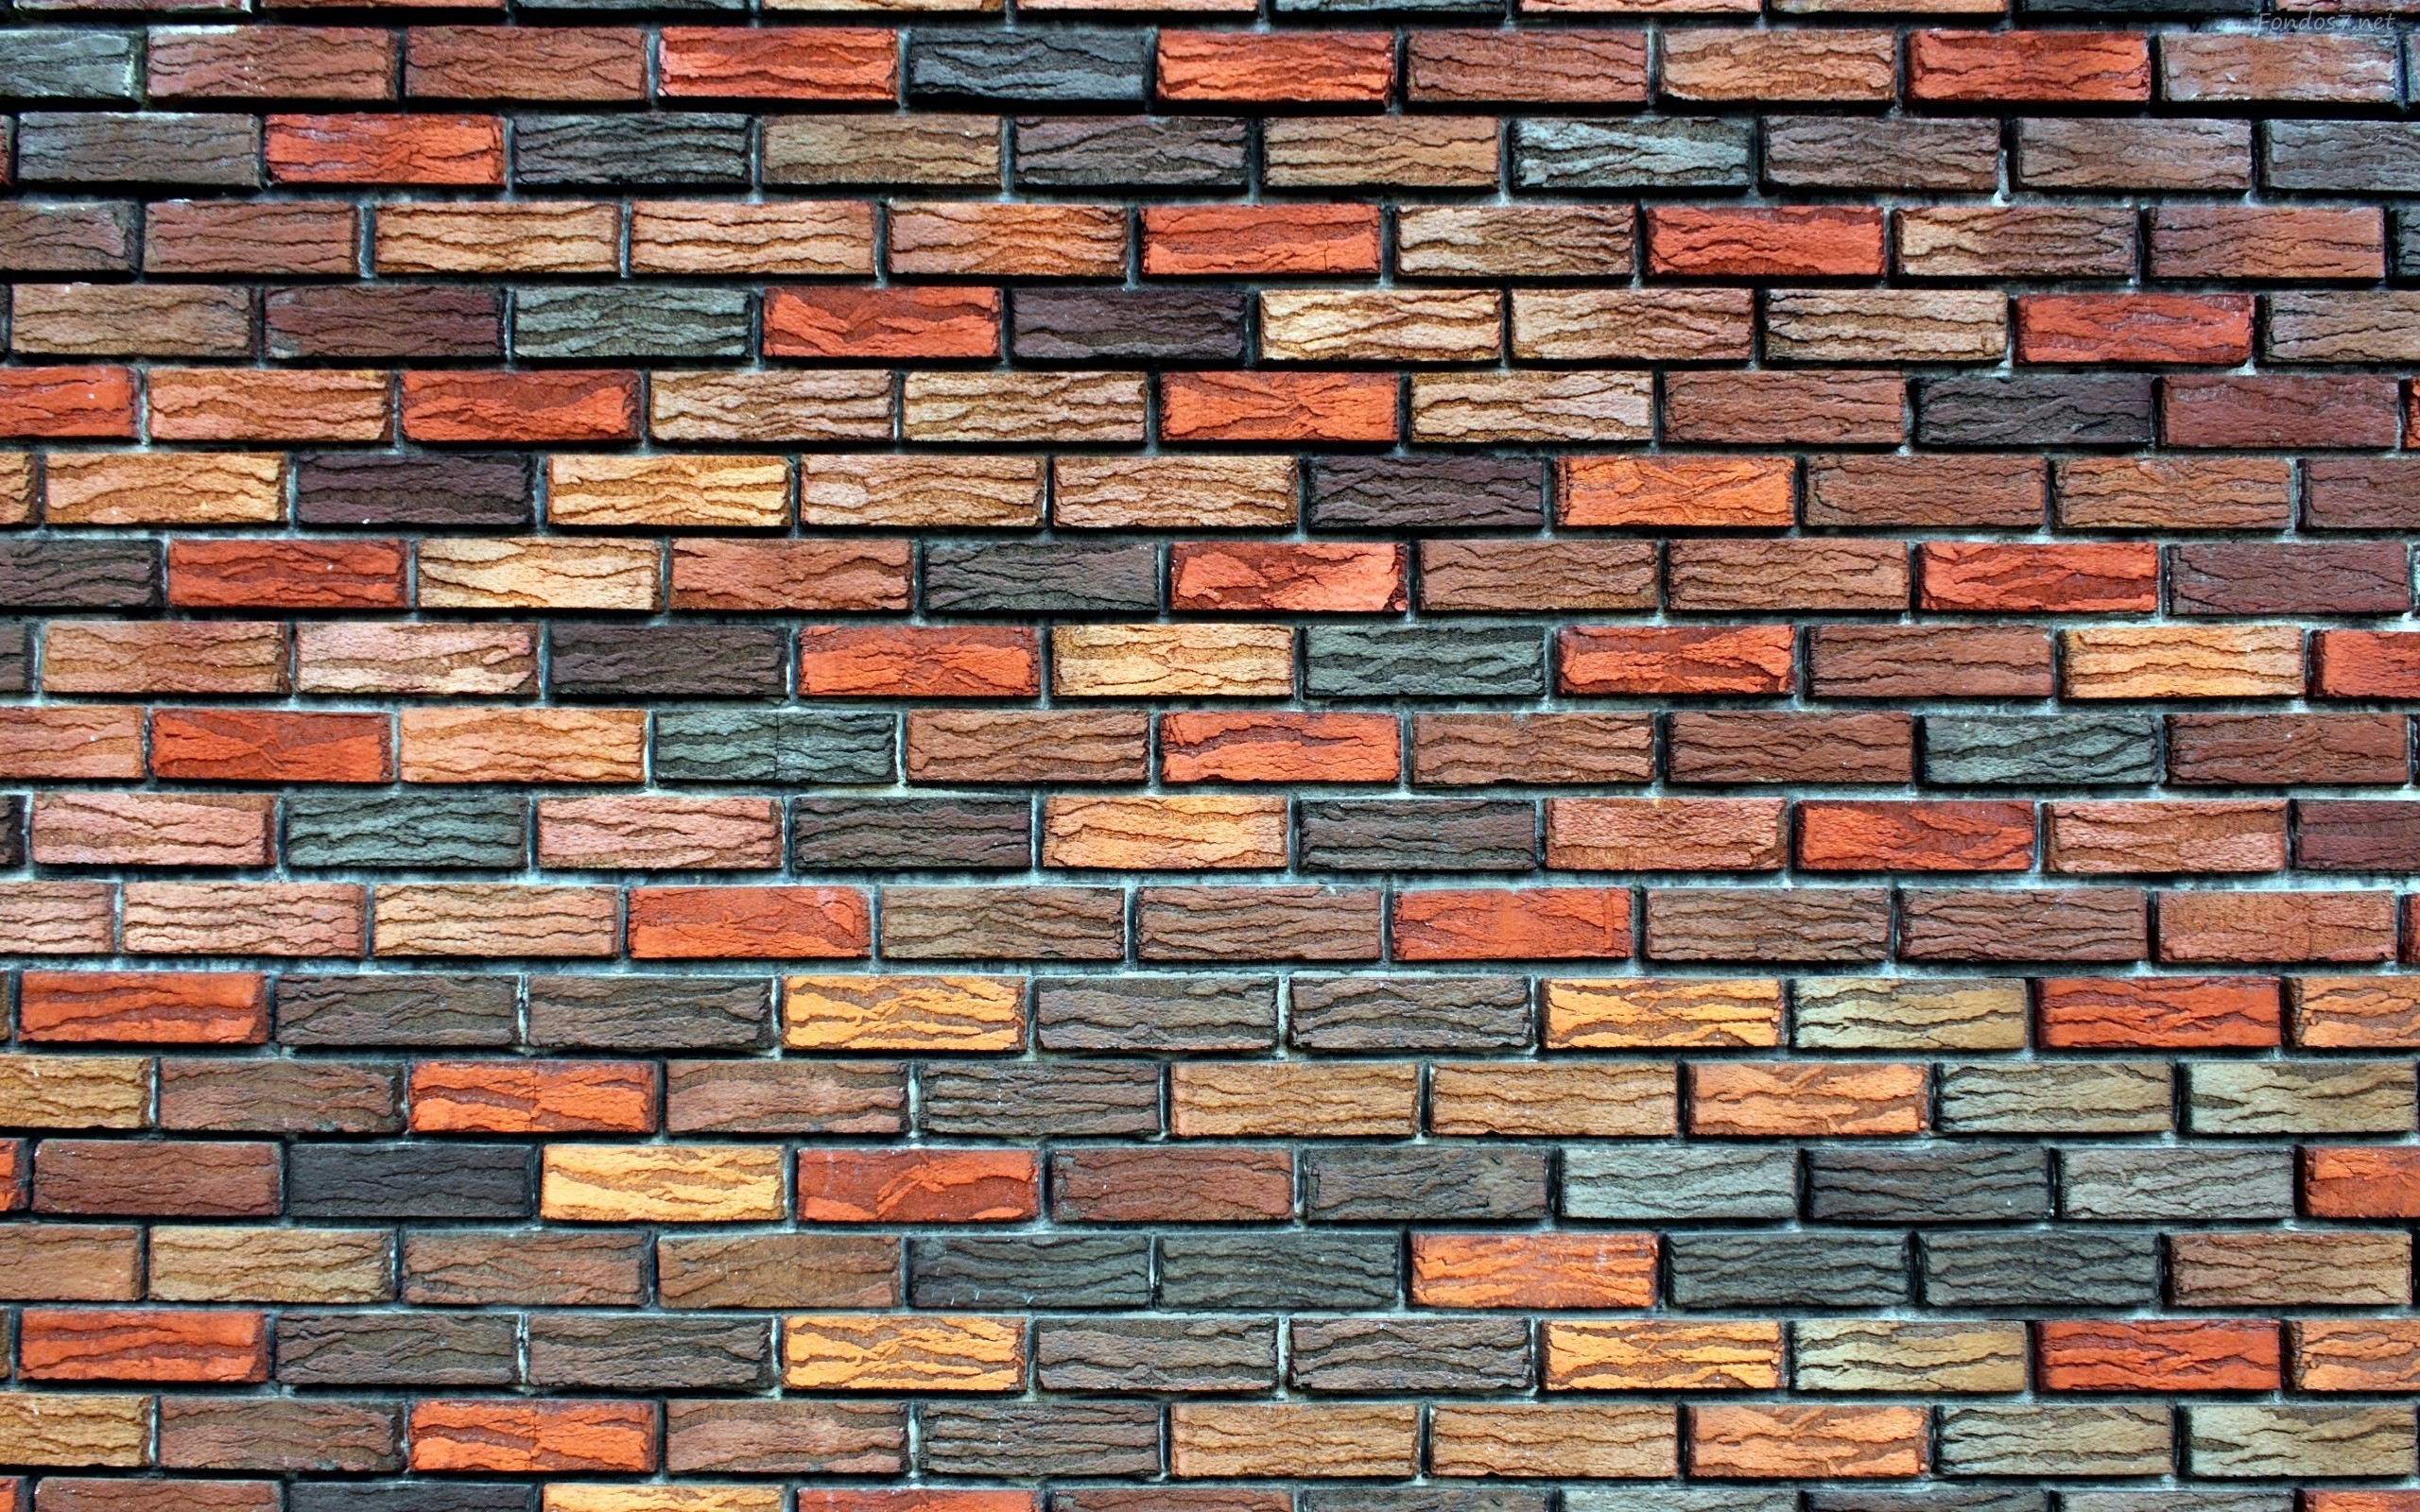 Colored bricks wall | for blog / ppt | Pinterest | Bricks